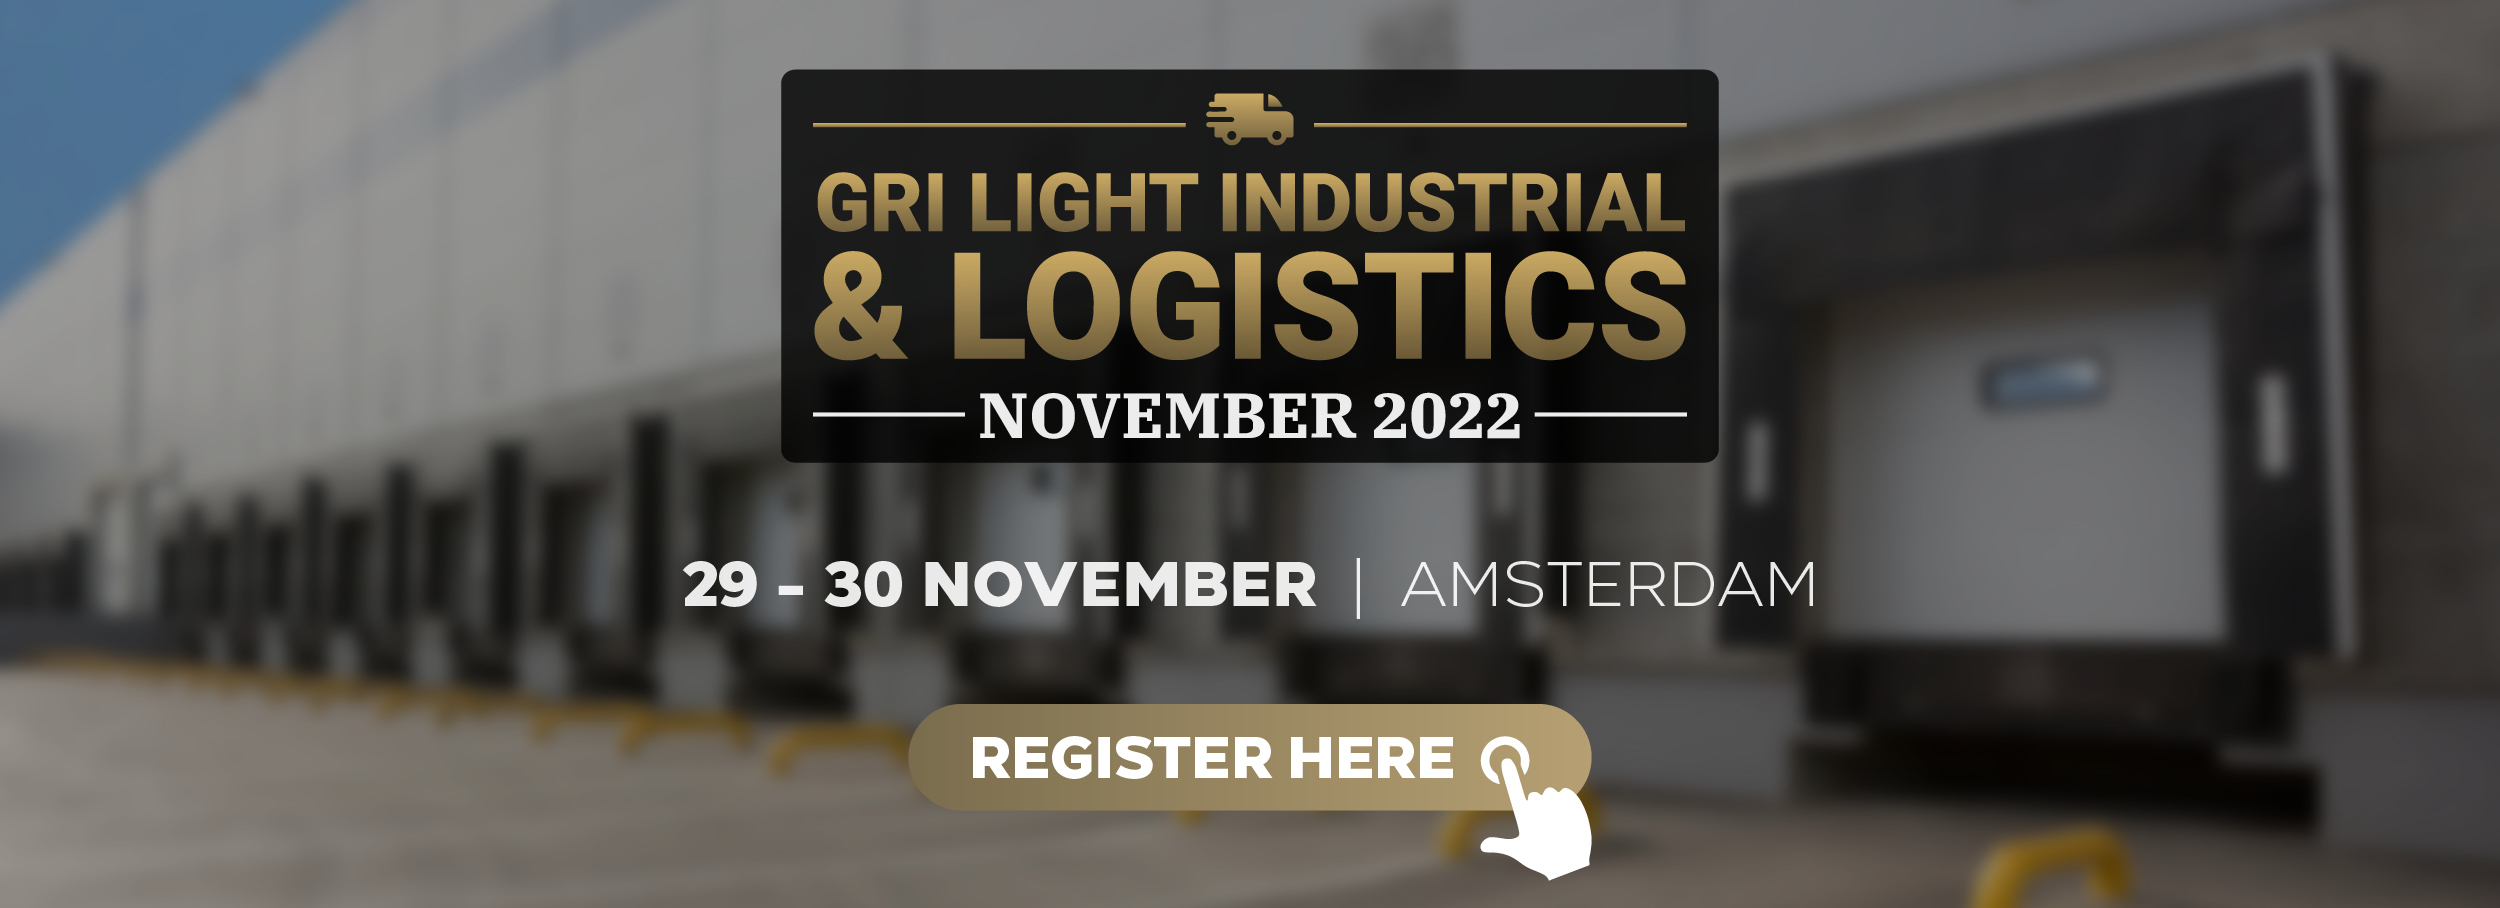 GRI Light Industrial & Logistics